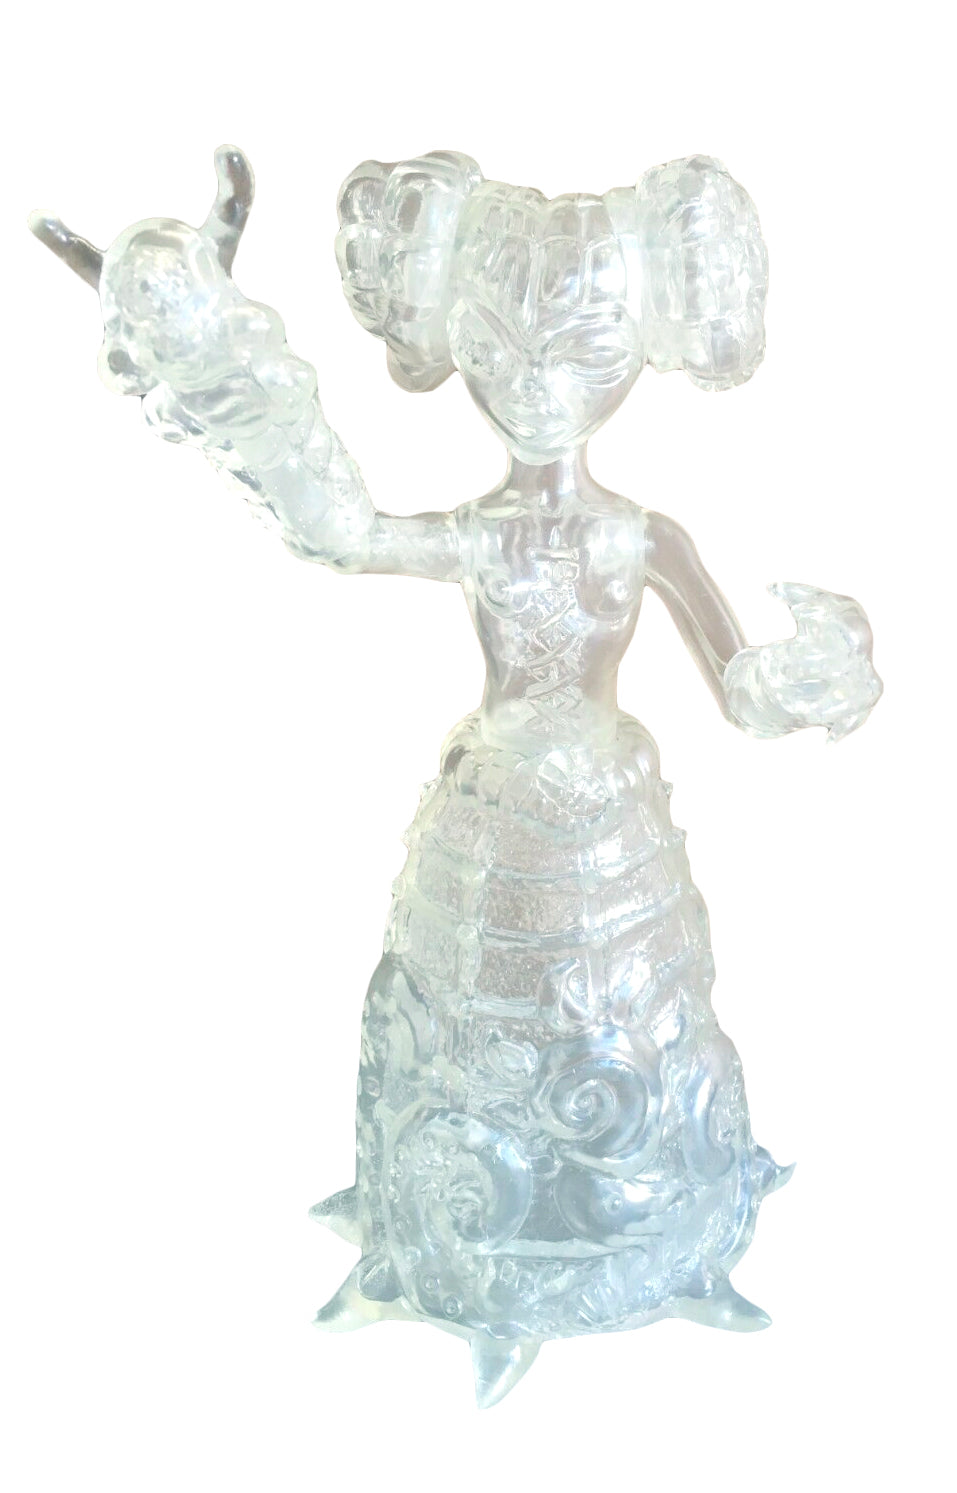 Paul Kaiju x Blobpus Vertebrata Sofubi Clear Soft Vinyl Figure 2013 Lucky Bag